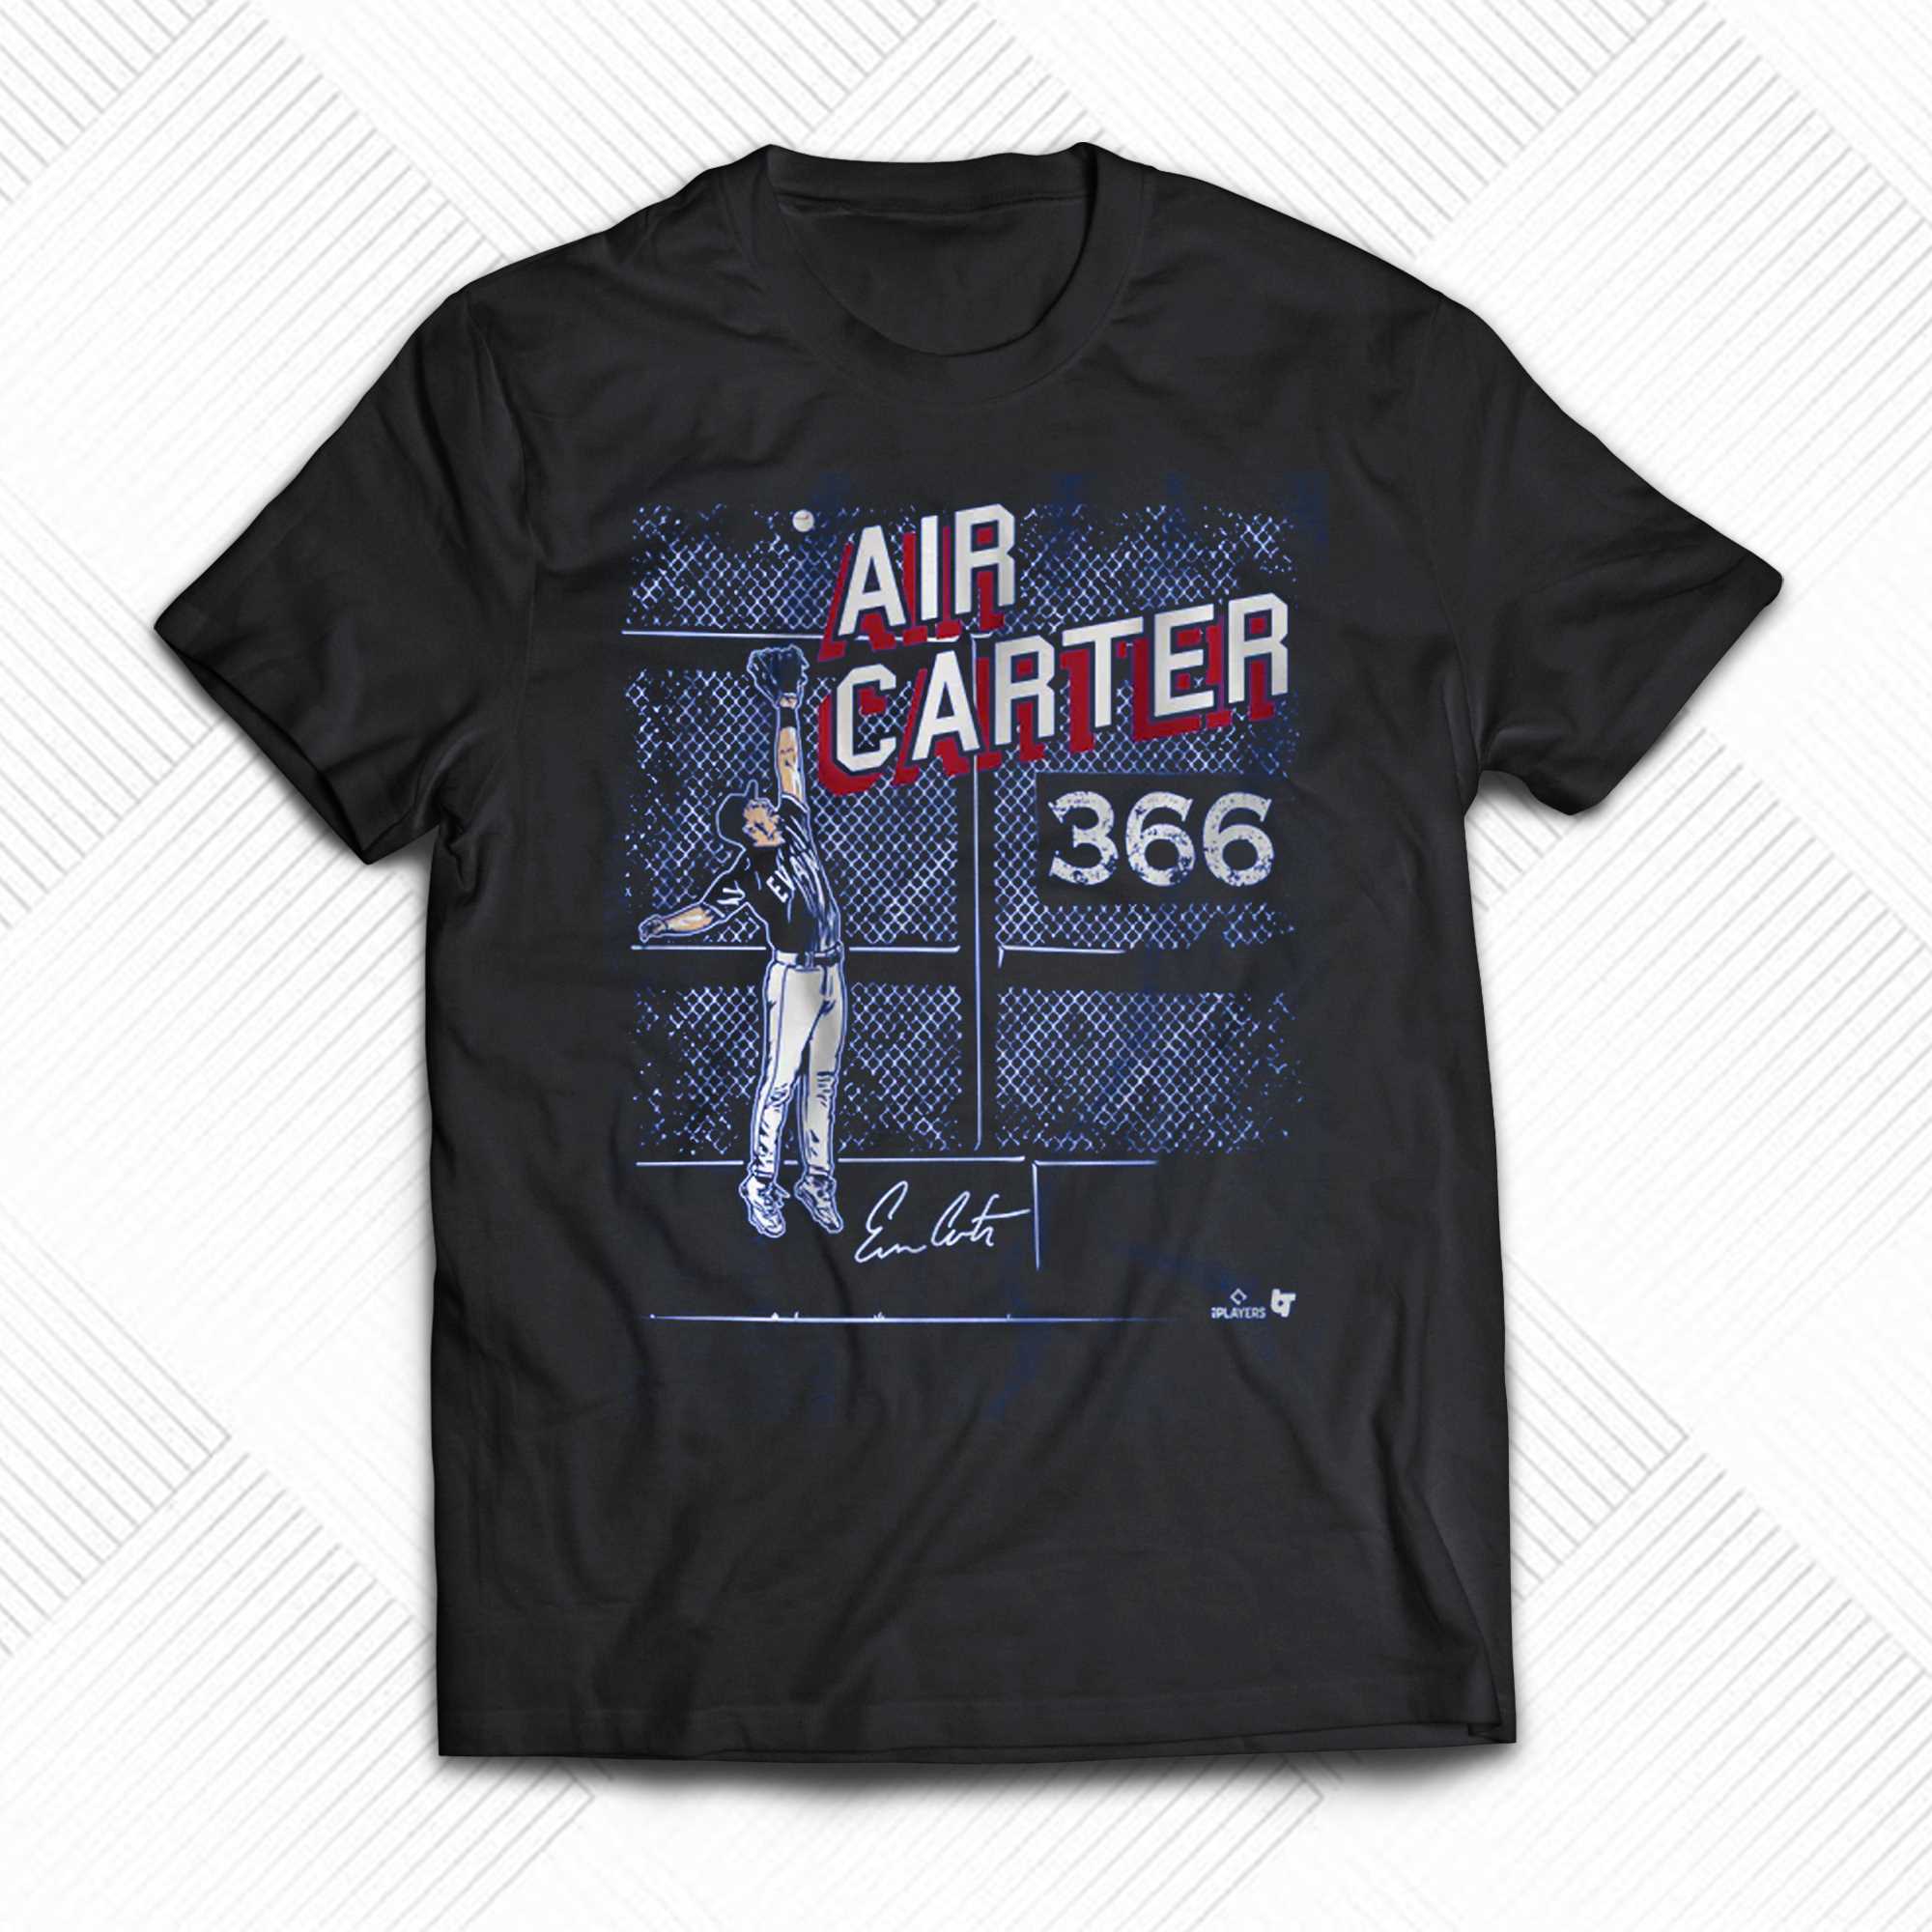 Evan Carter Air Carter T-shirt - Shibtee Clothing